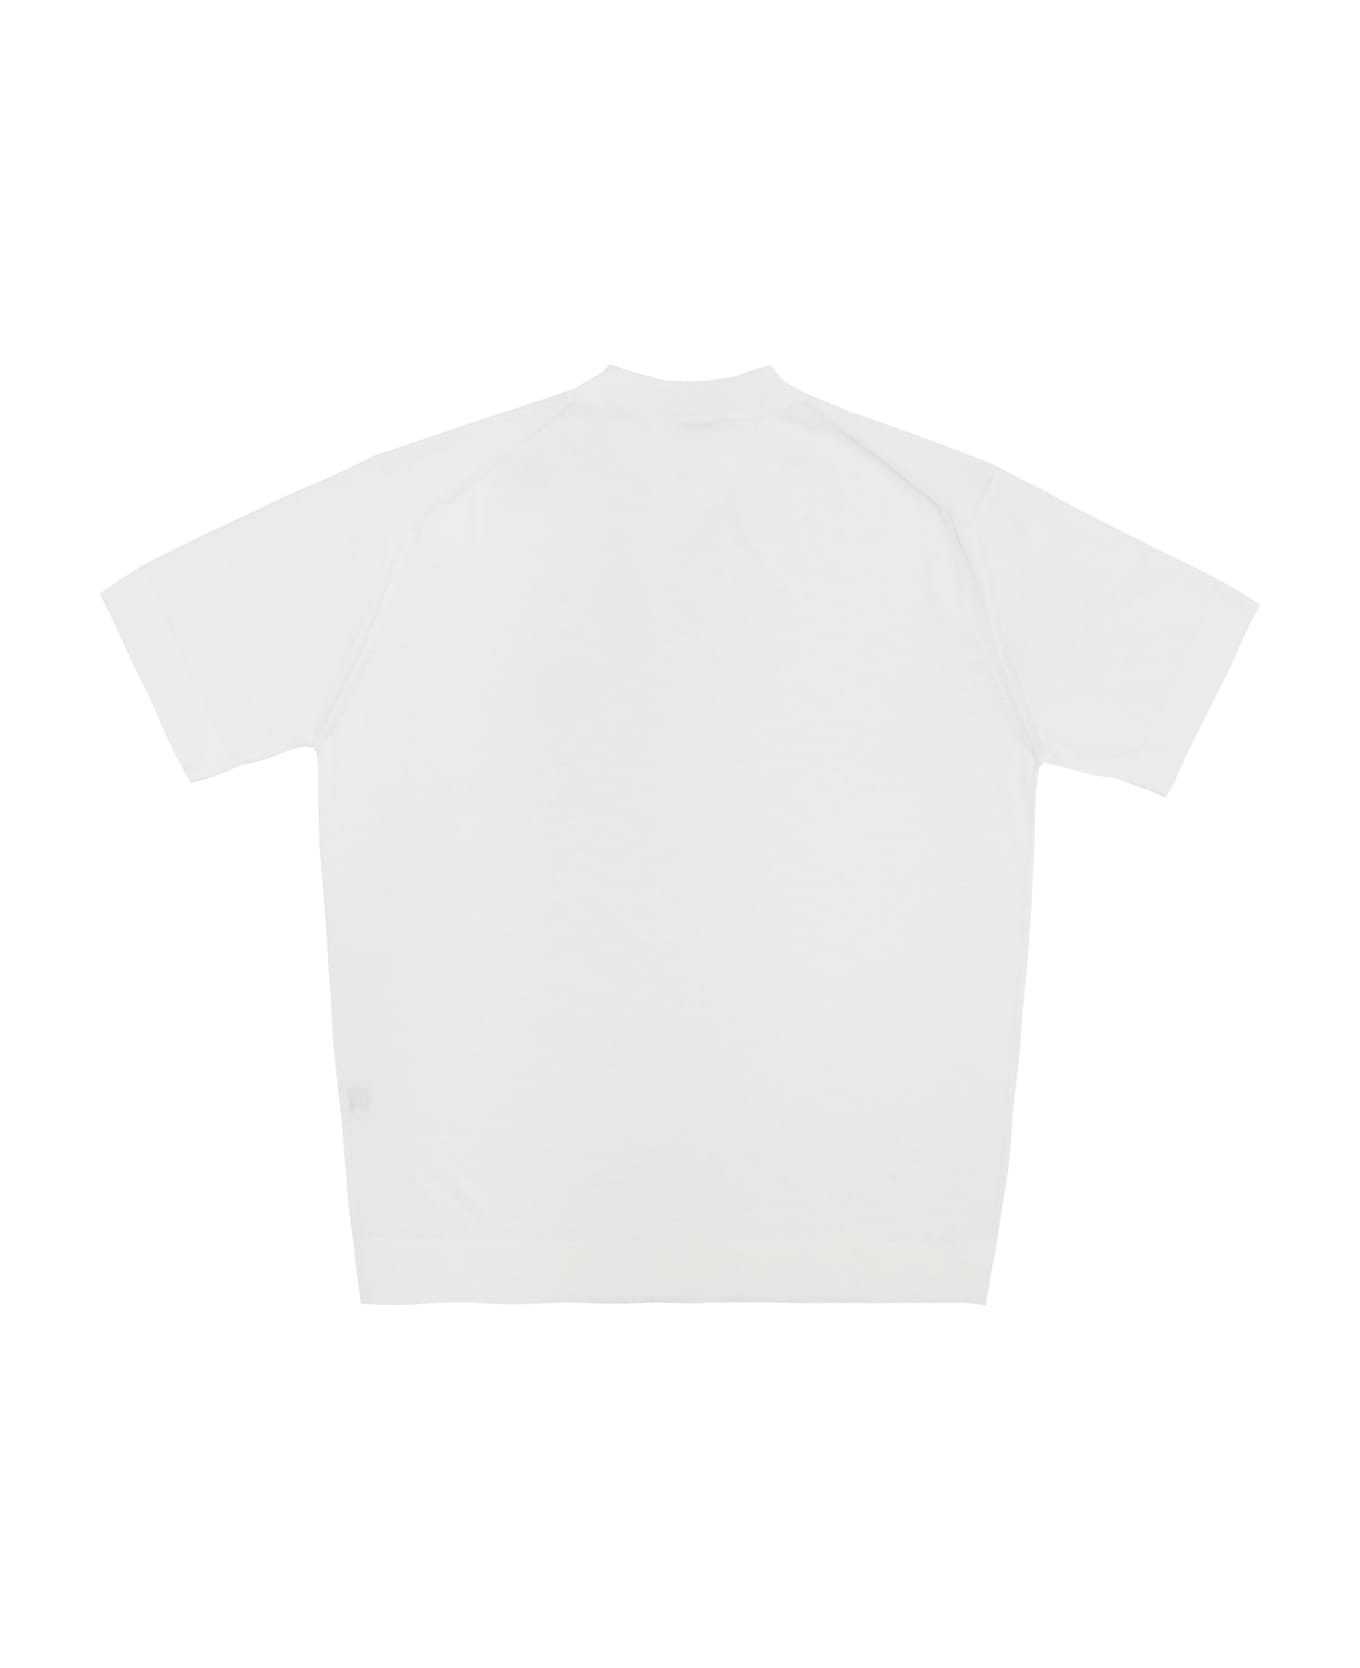 Filippo De Laurentiis T-shirt - White